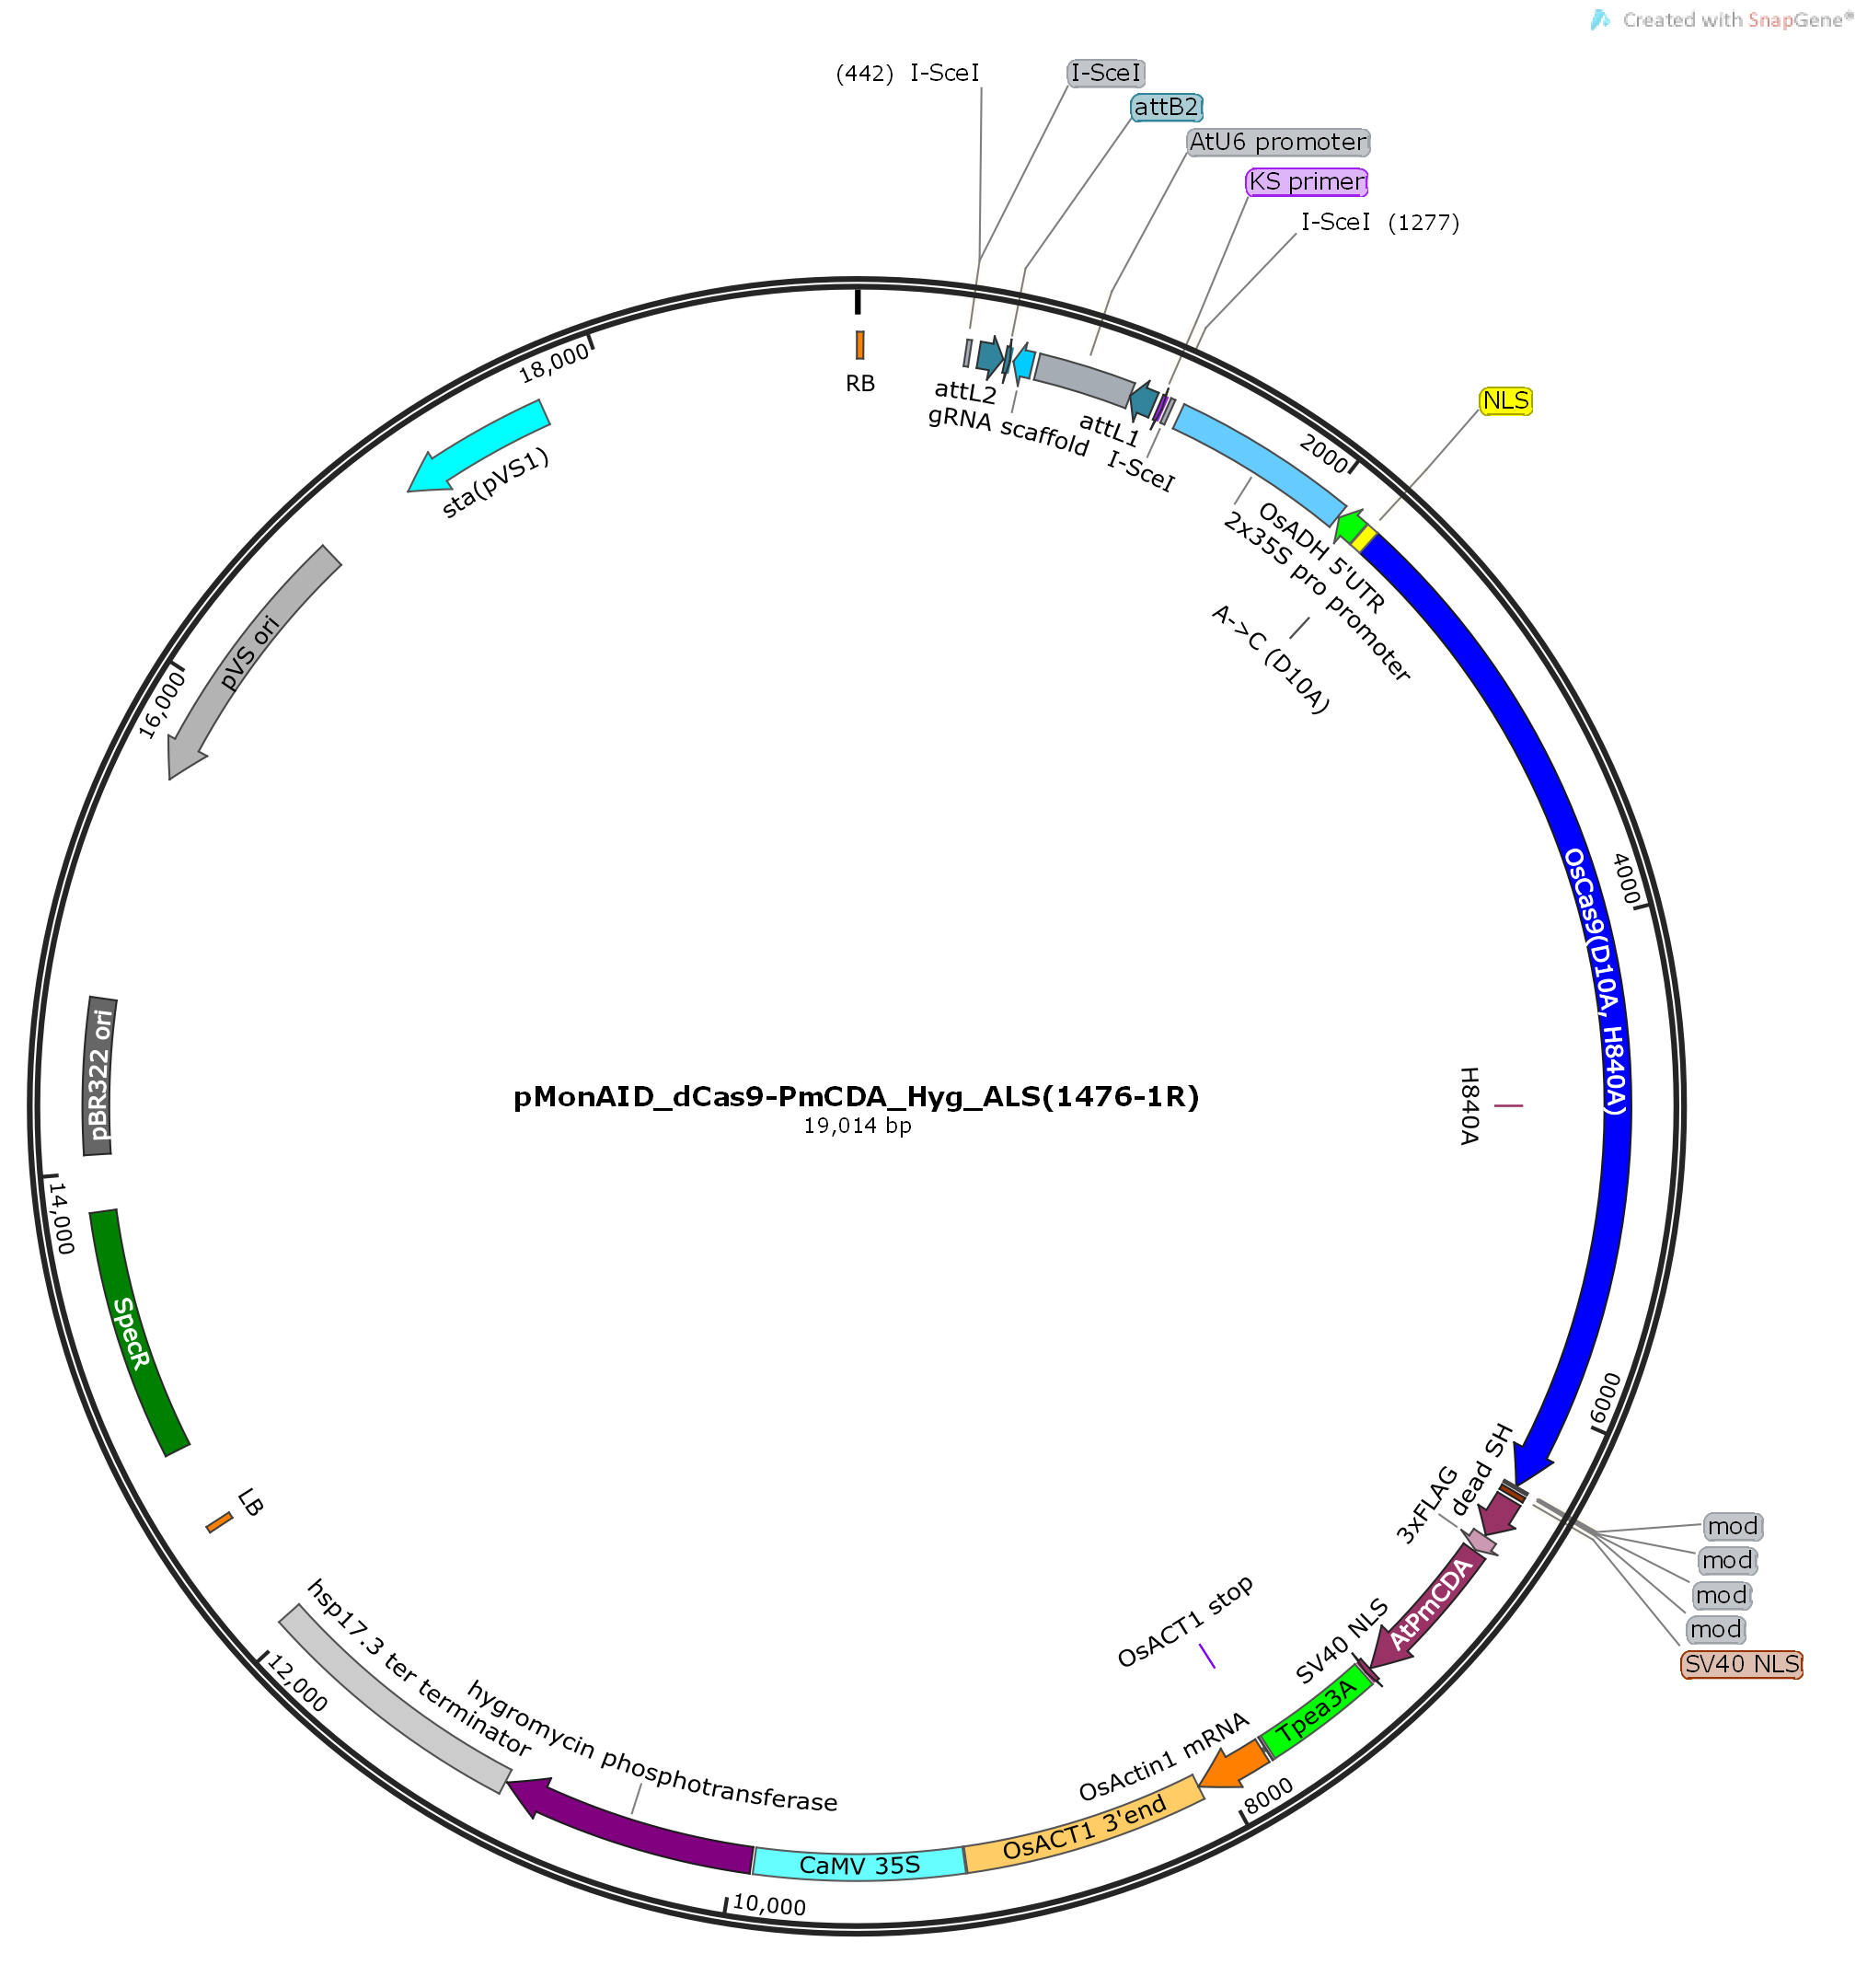 pMonAID_dCas9-PmCDA_Hyg_ALS植物dCAS9和gRNA表达质粒